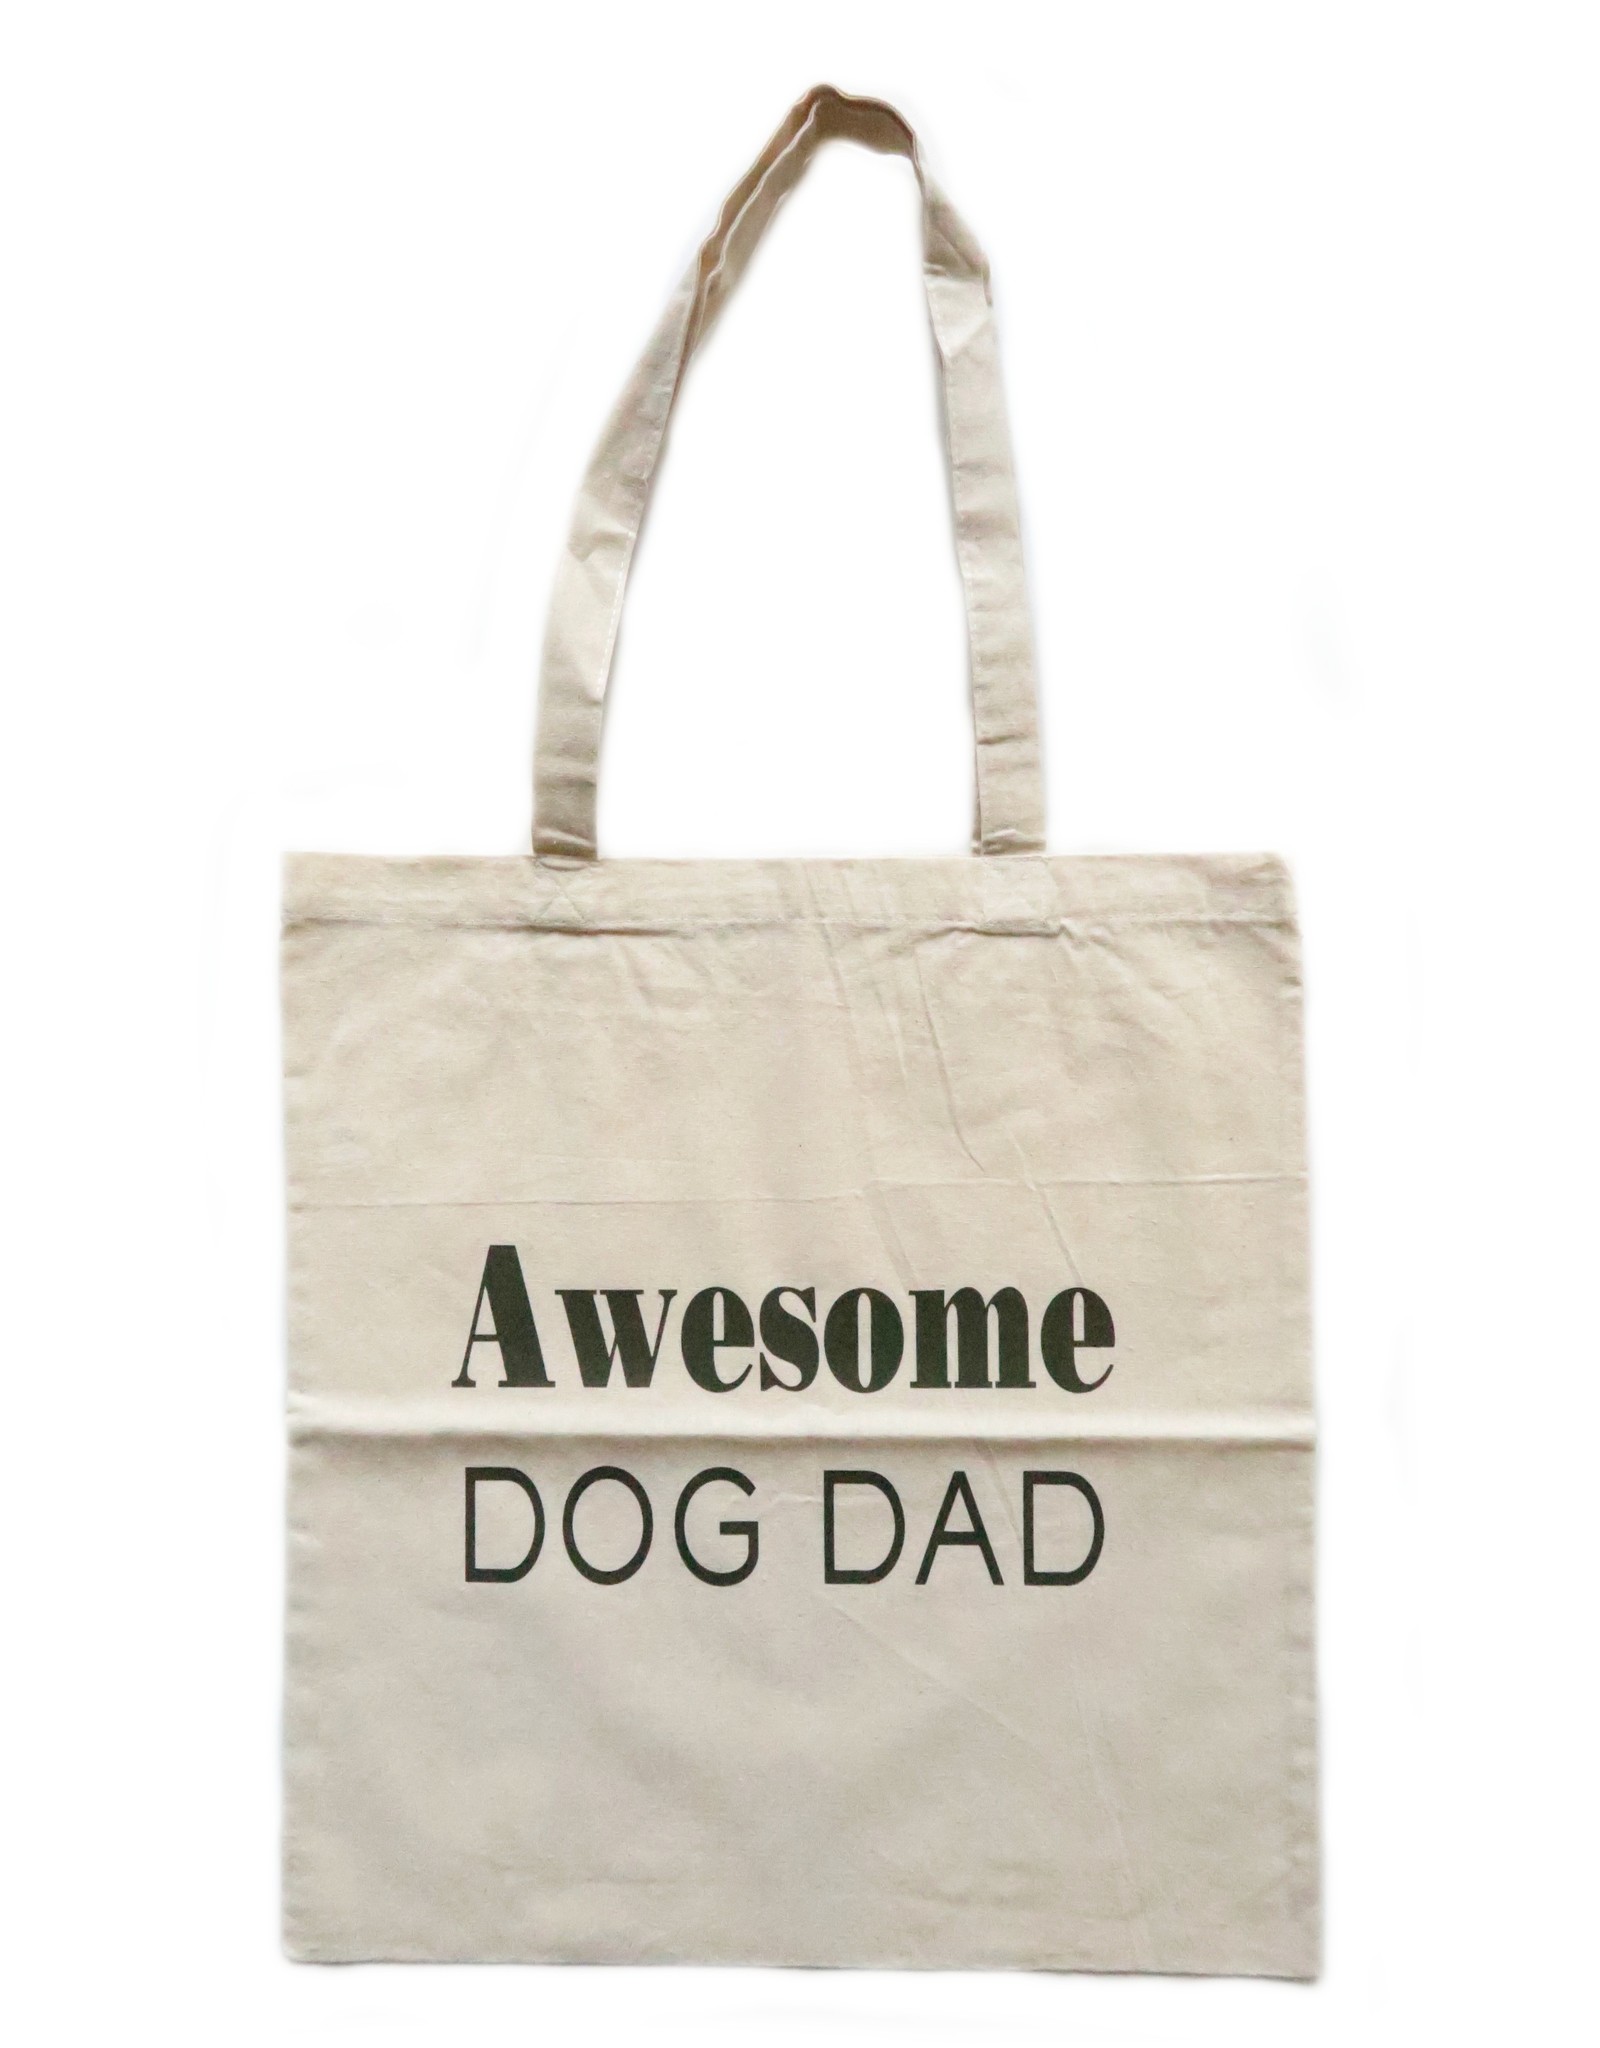 Awesome dog dad bag